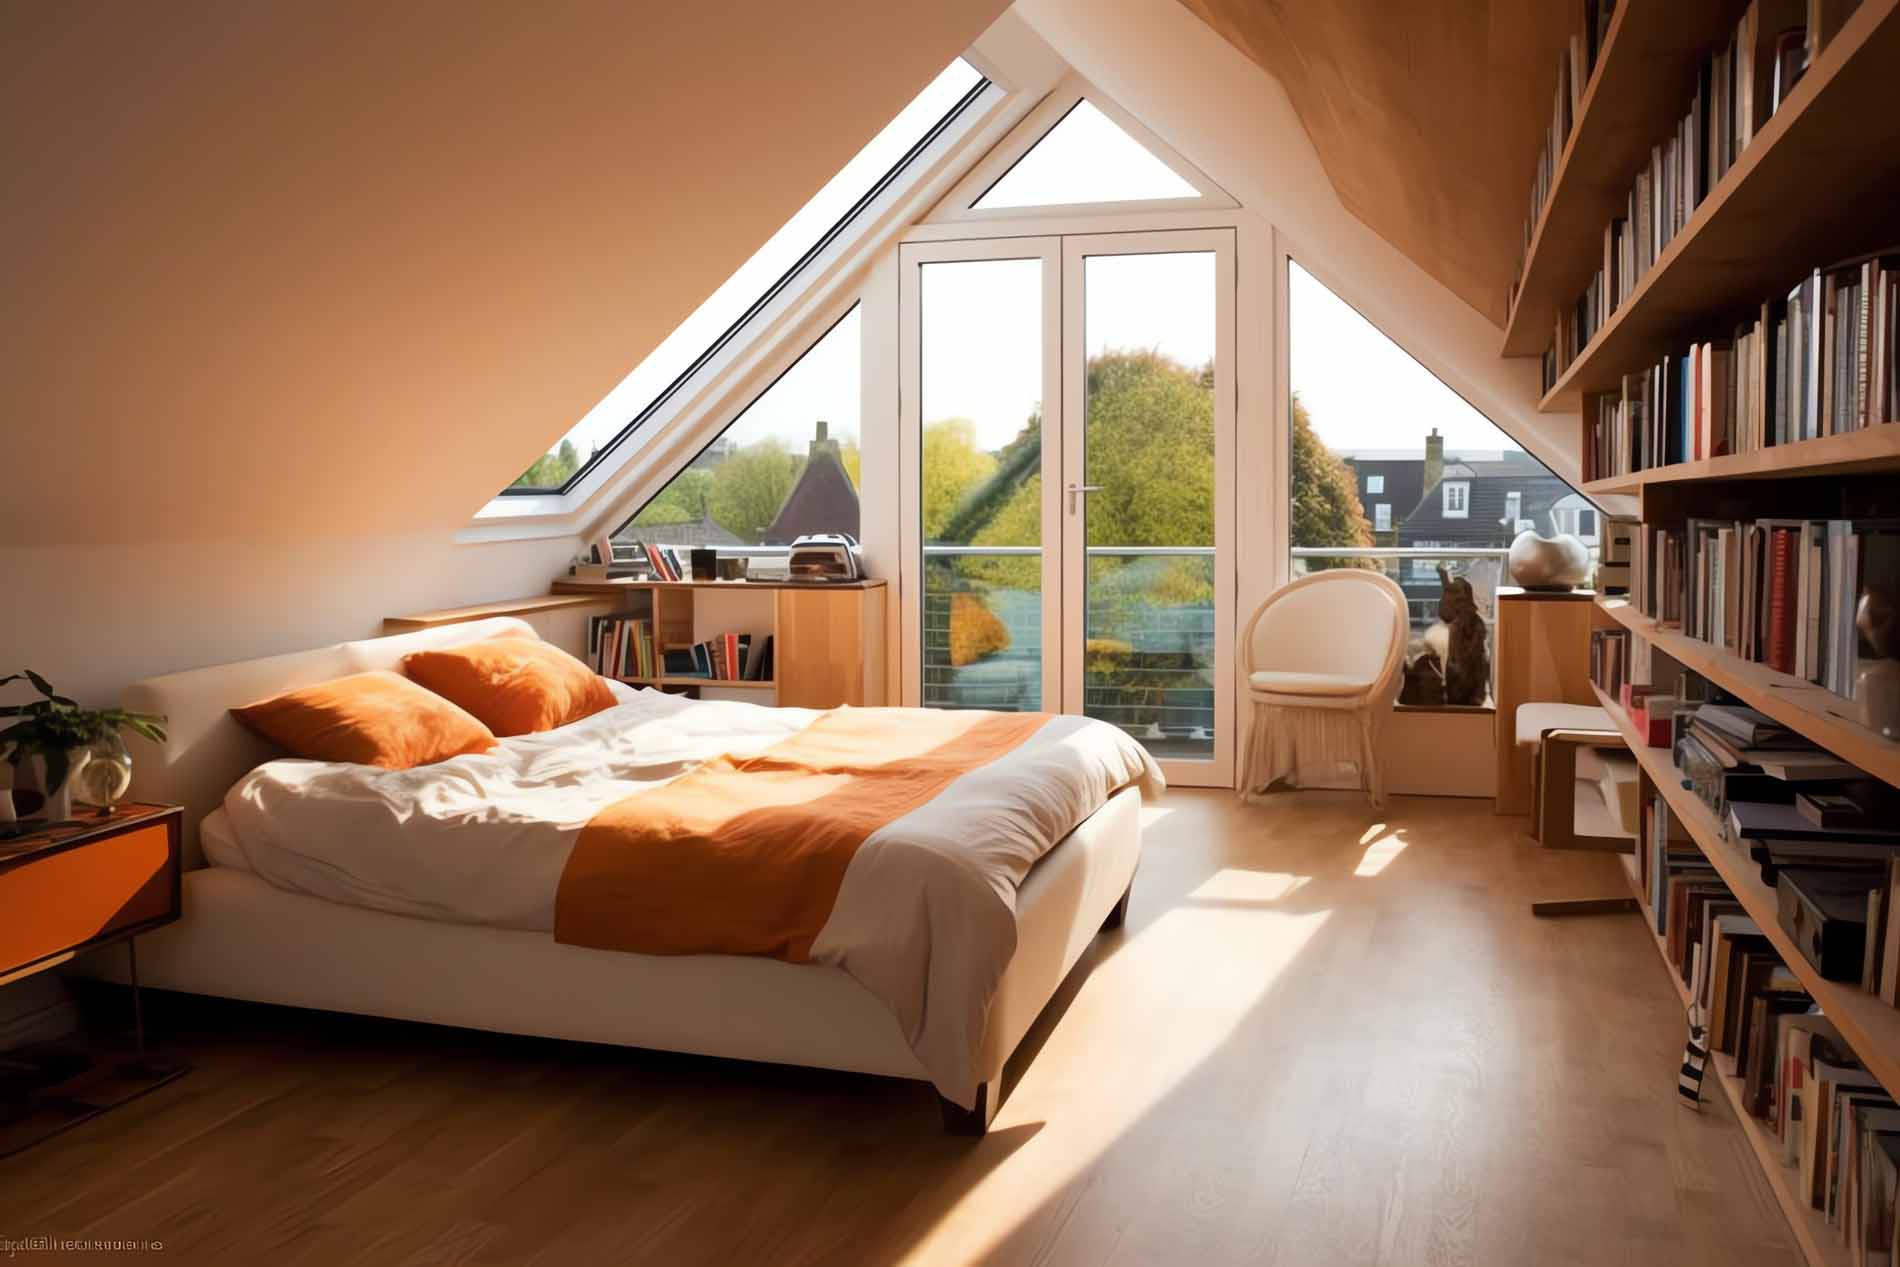 vecteezy_modern-dormer-loft-conversion-interior-design-in-apartment_31342358